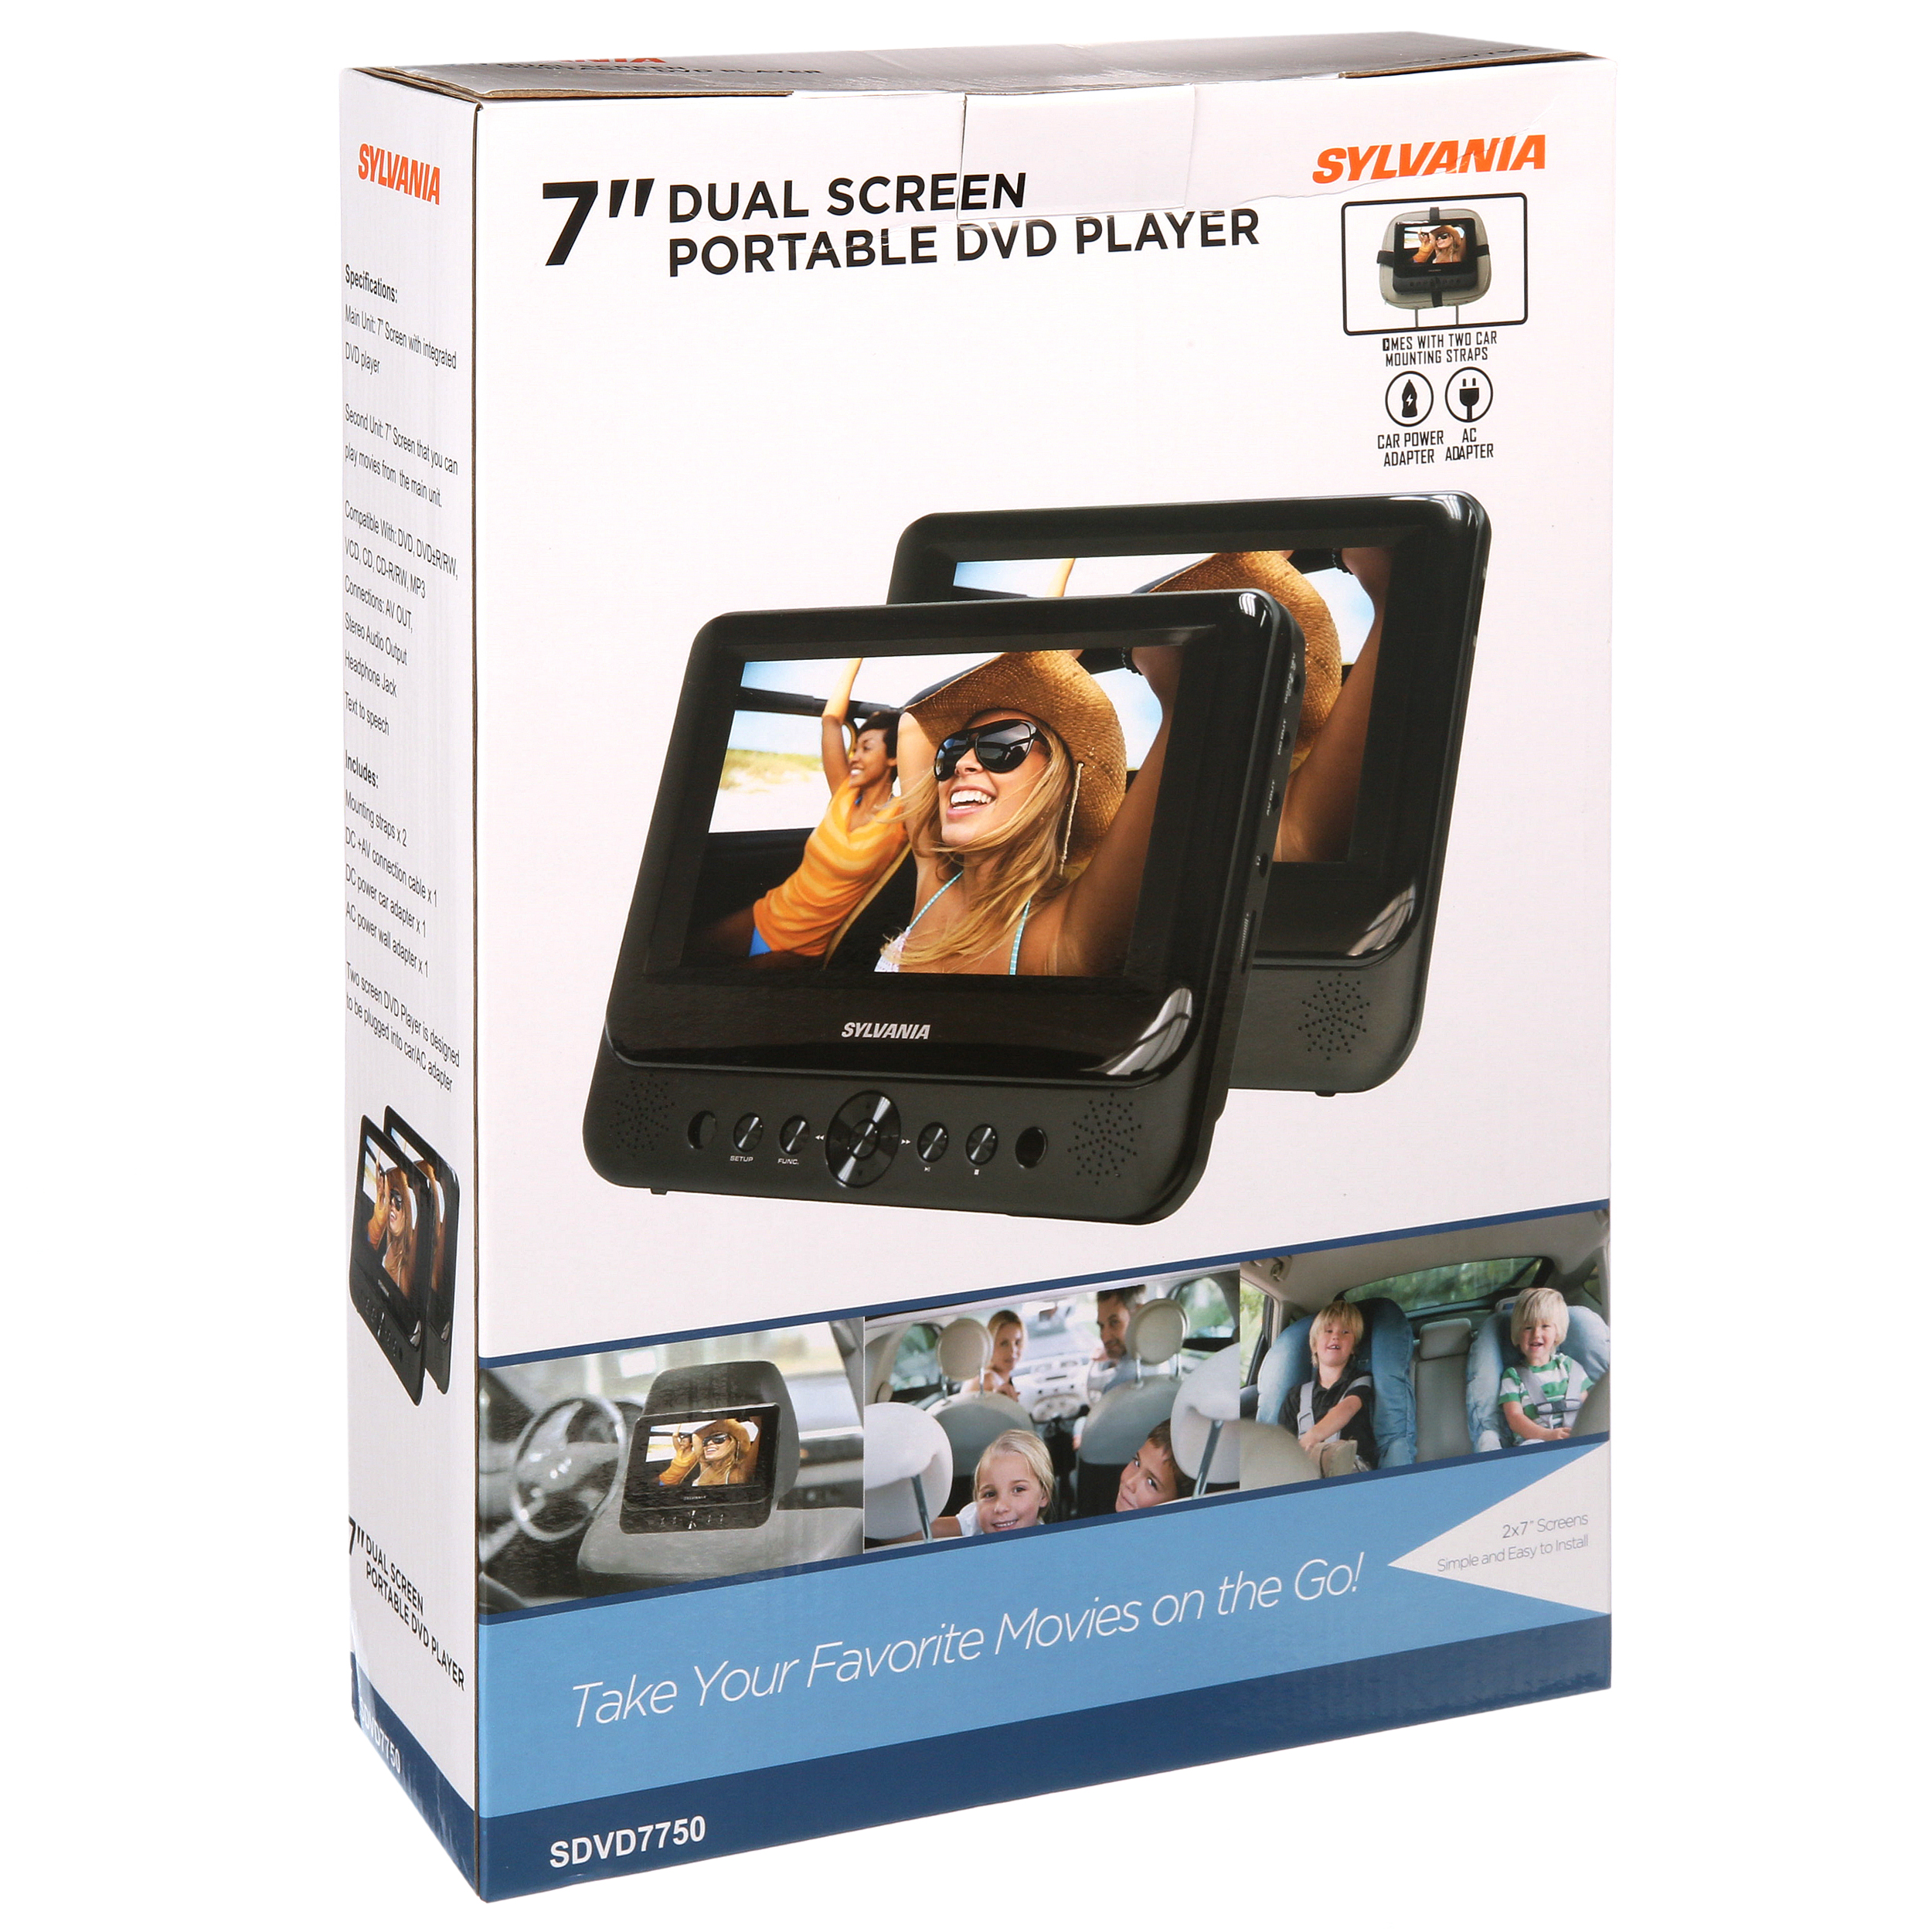 Sylvania 7" Dual Screen Portable DVD Player - image 5 of 7